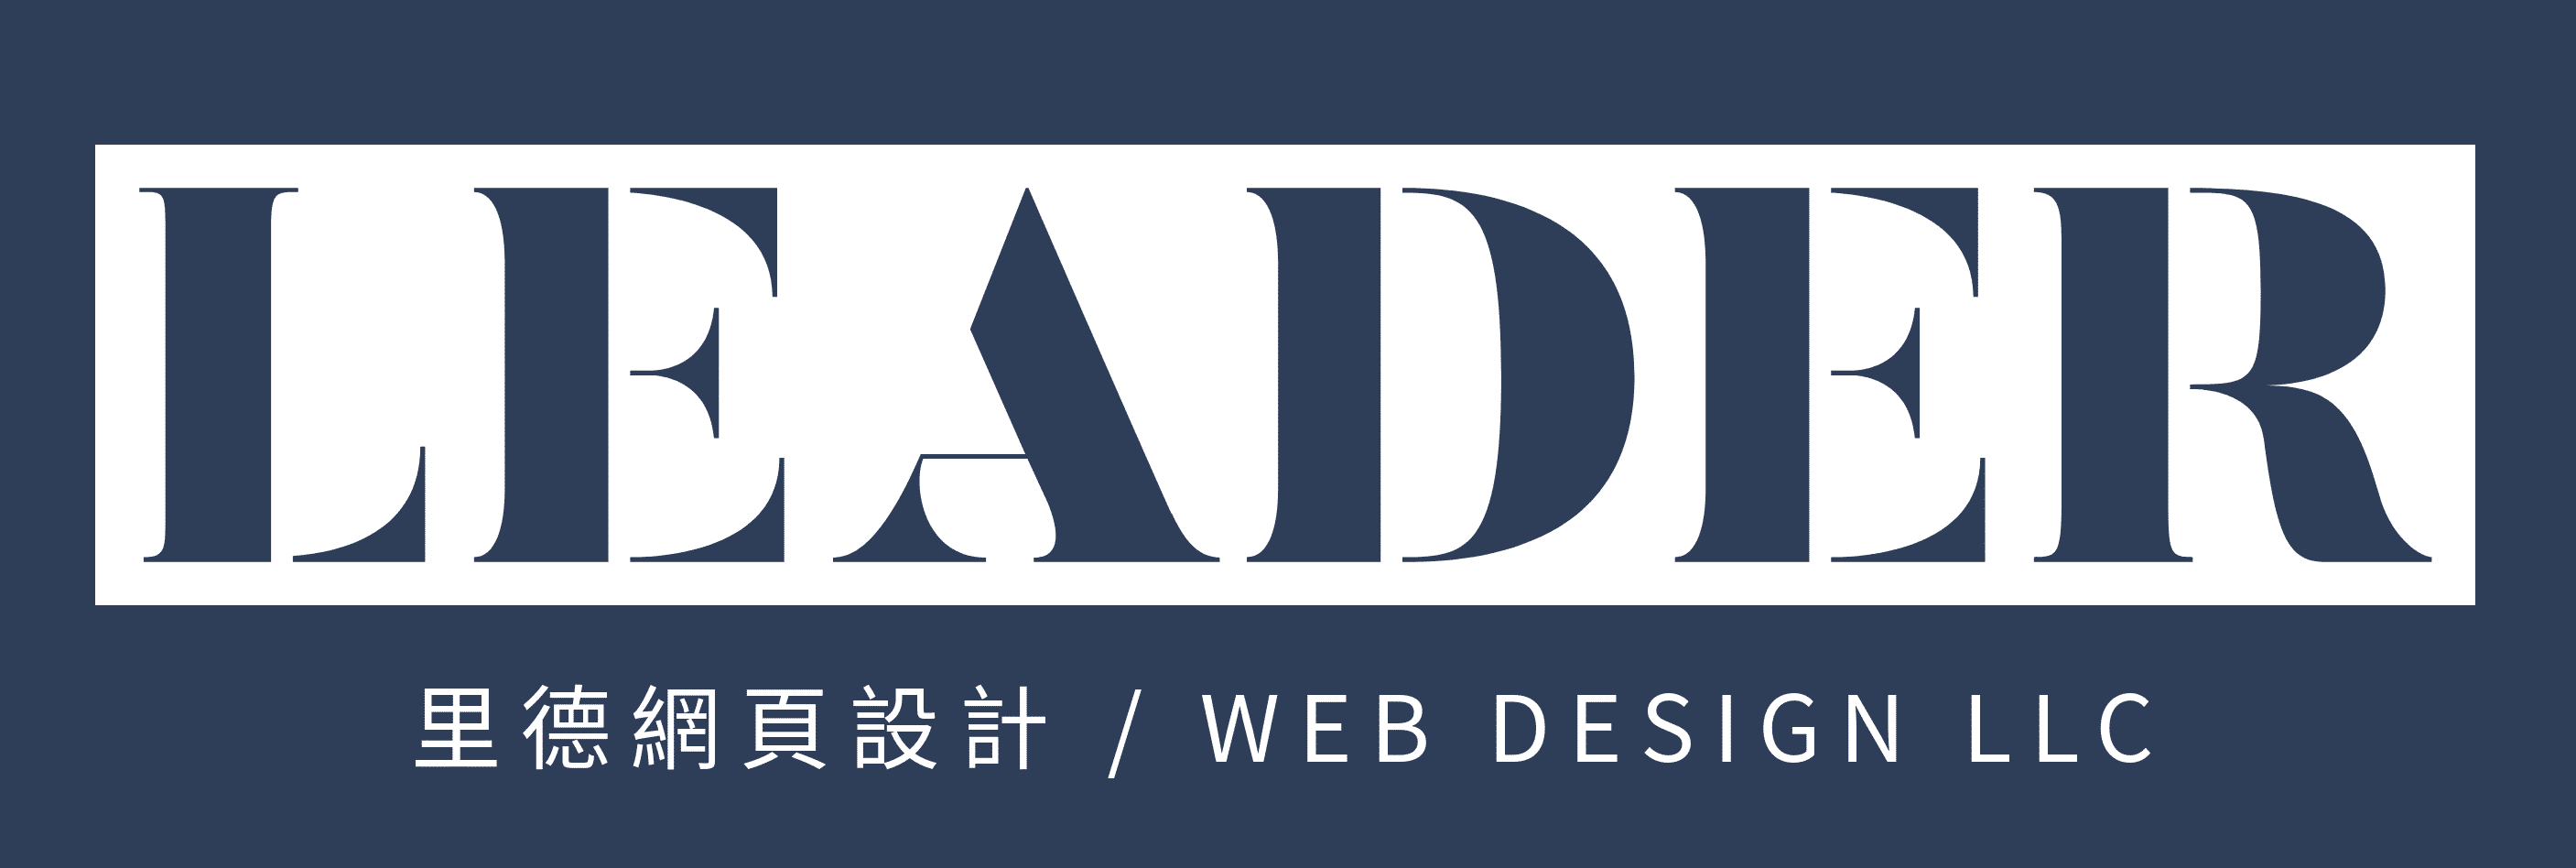 Leader Web Design LLC